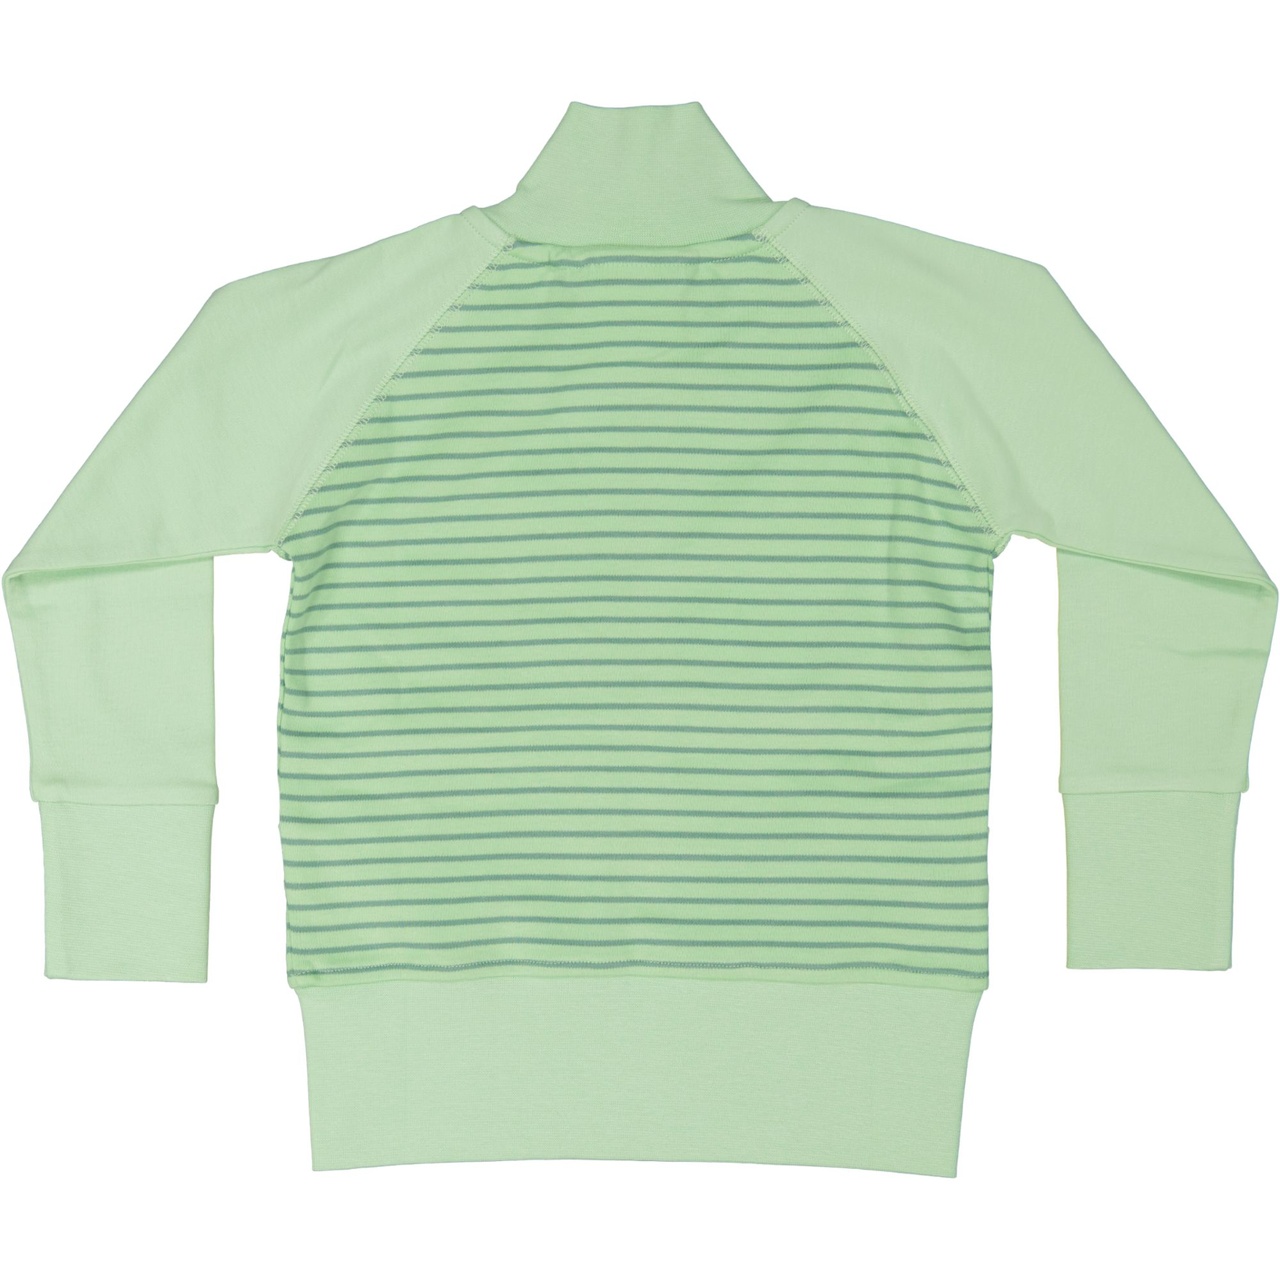 Zip sweater L.green/green  146/152